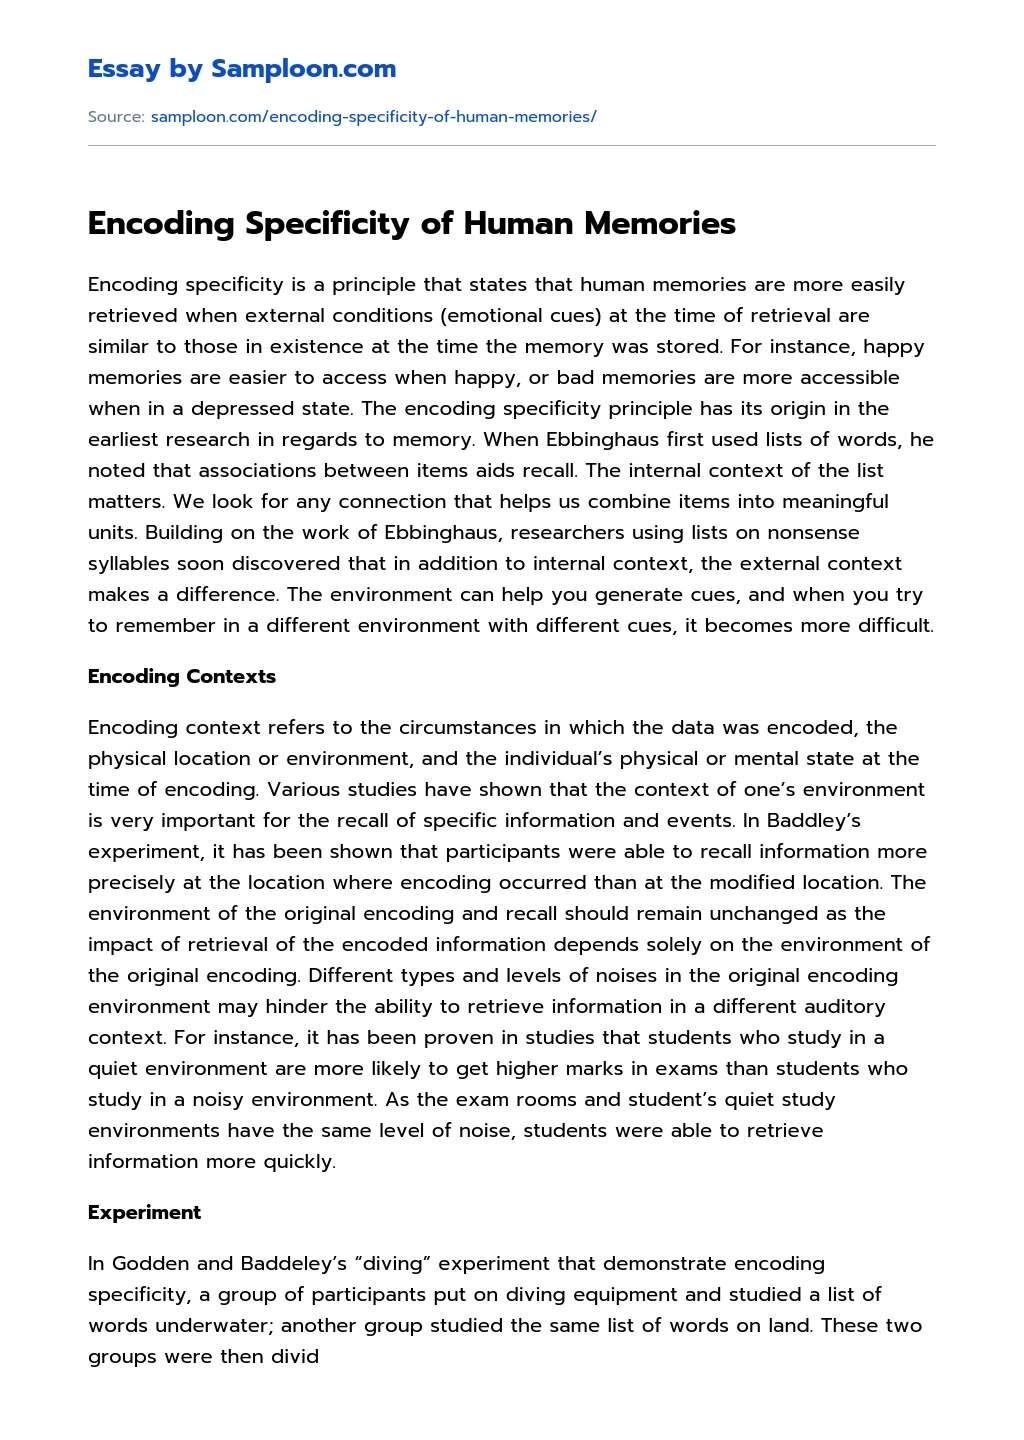 Encoding Specificity of Human Memories Argumentative Essay essay